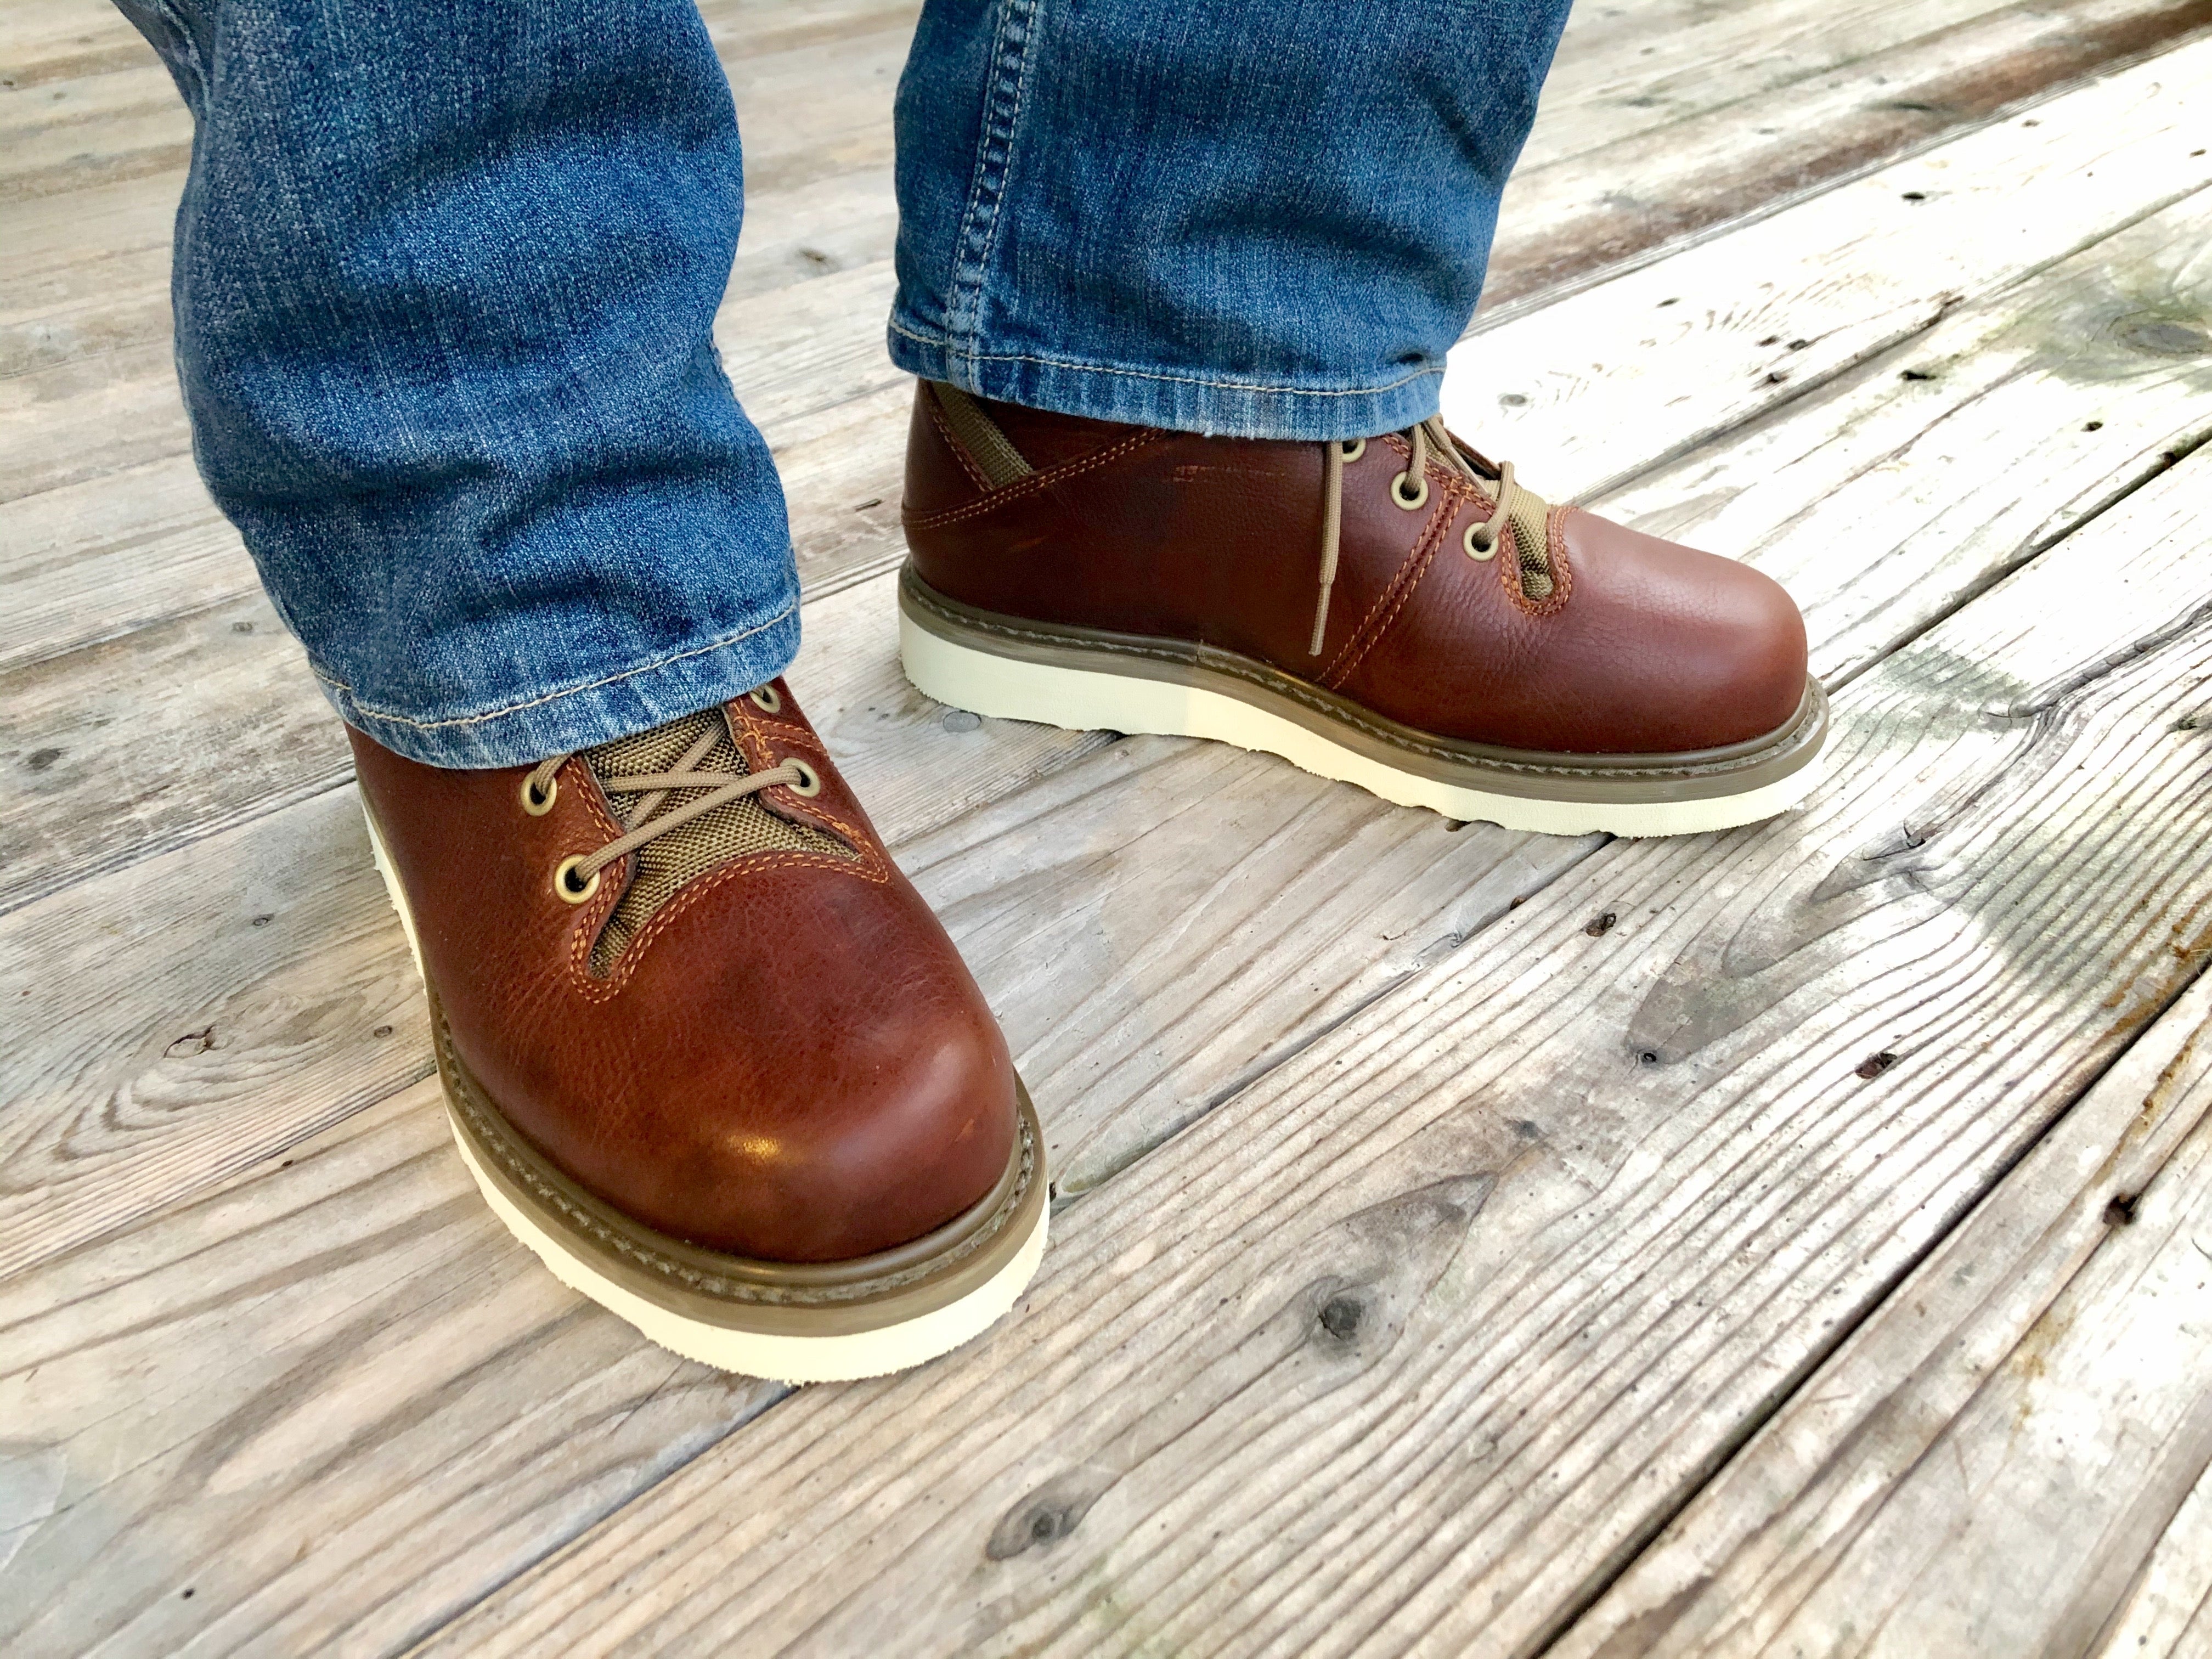 elk woods boots review